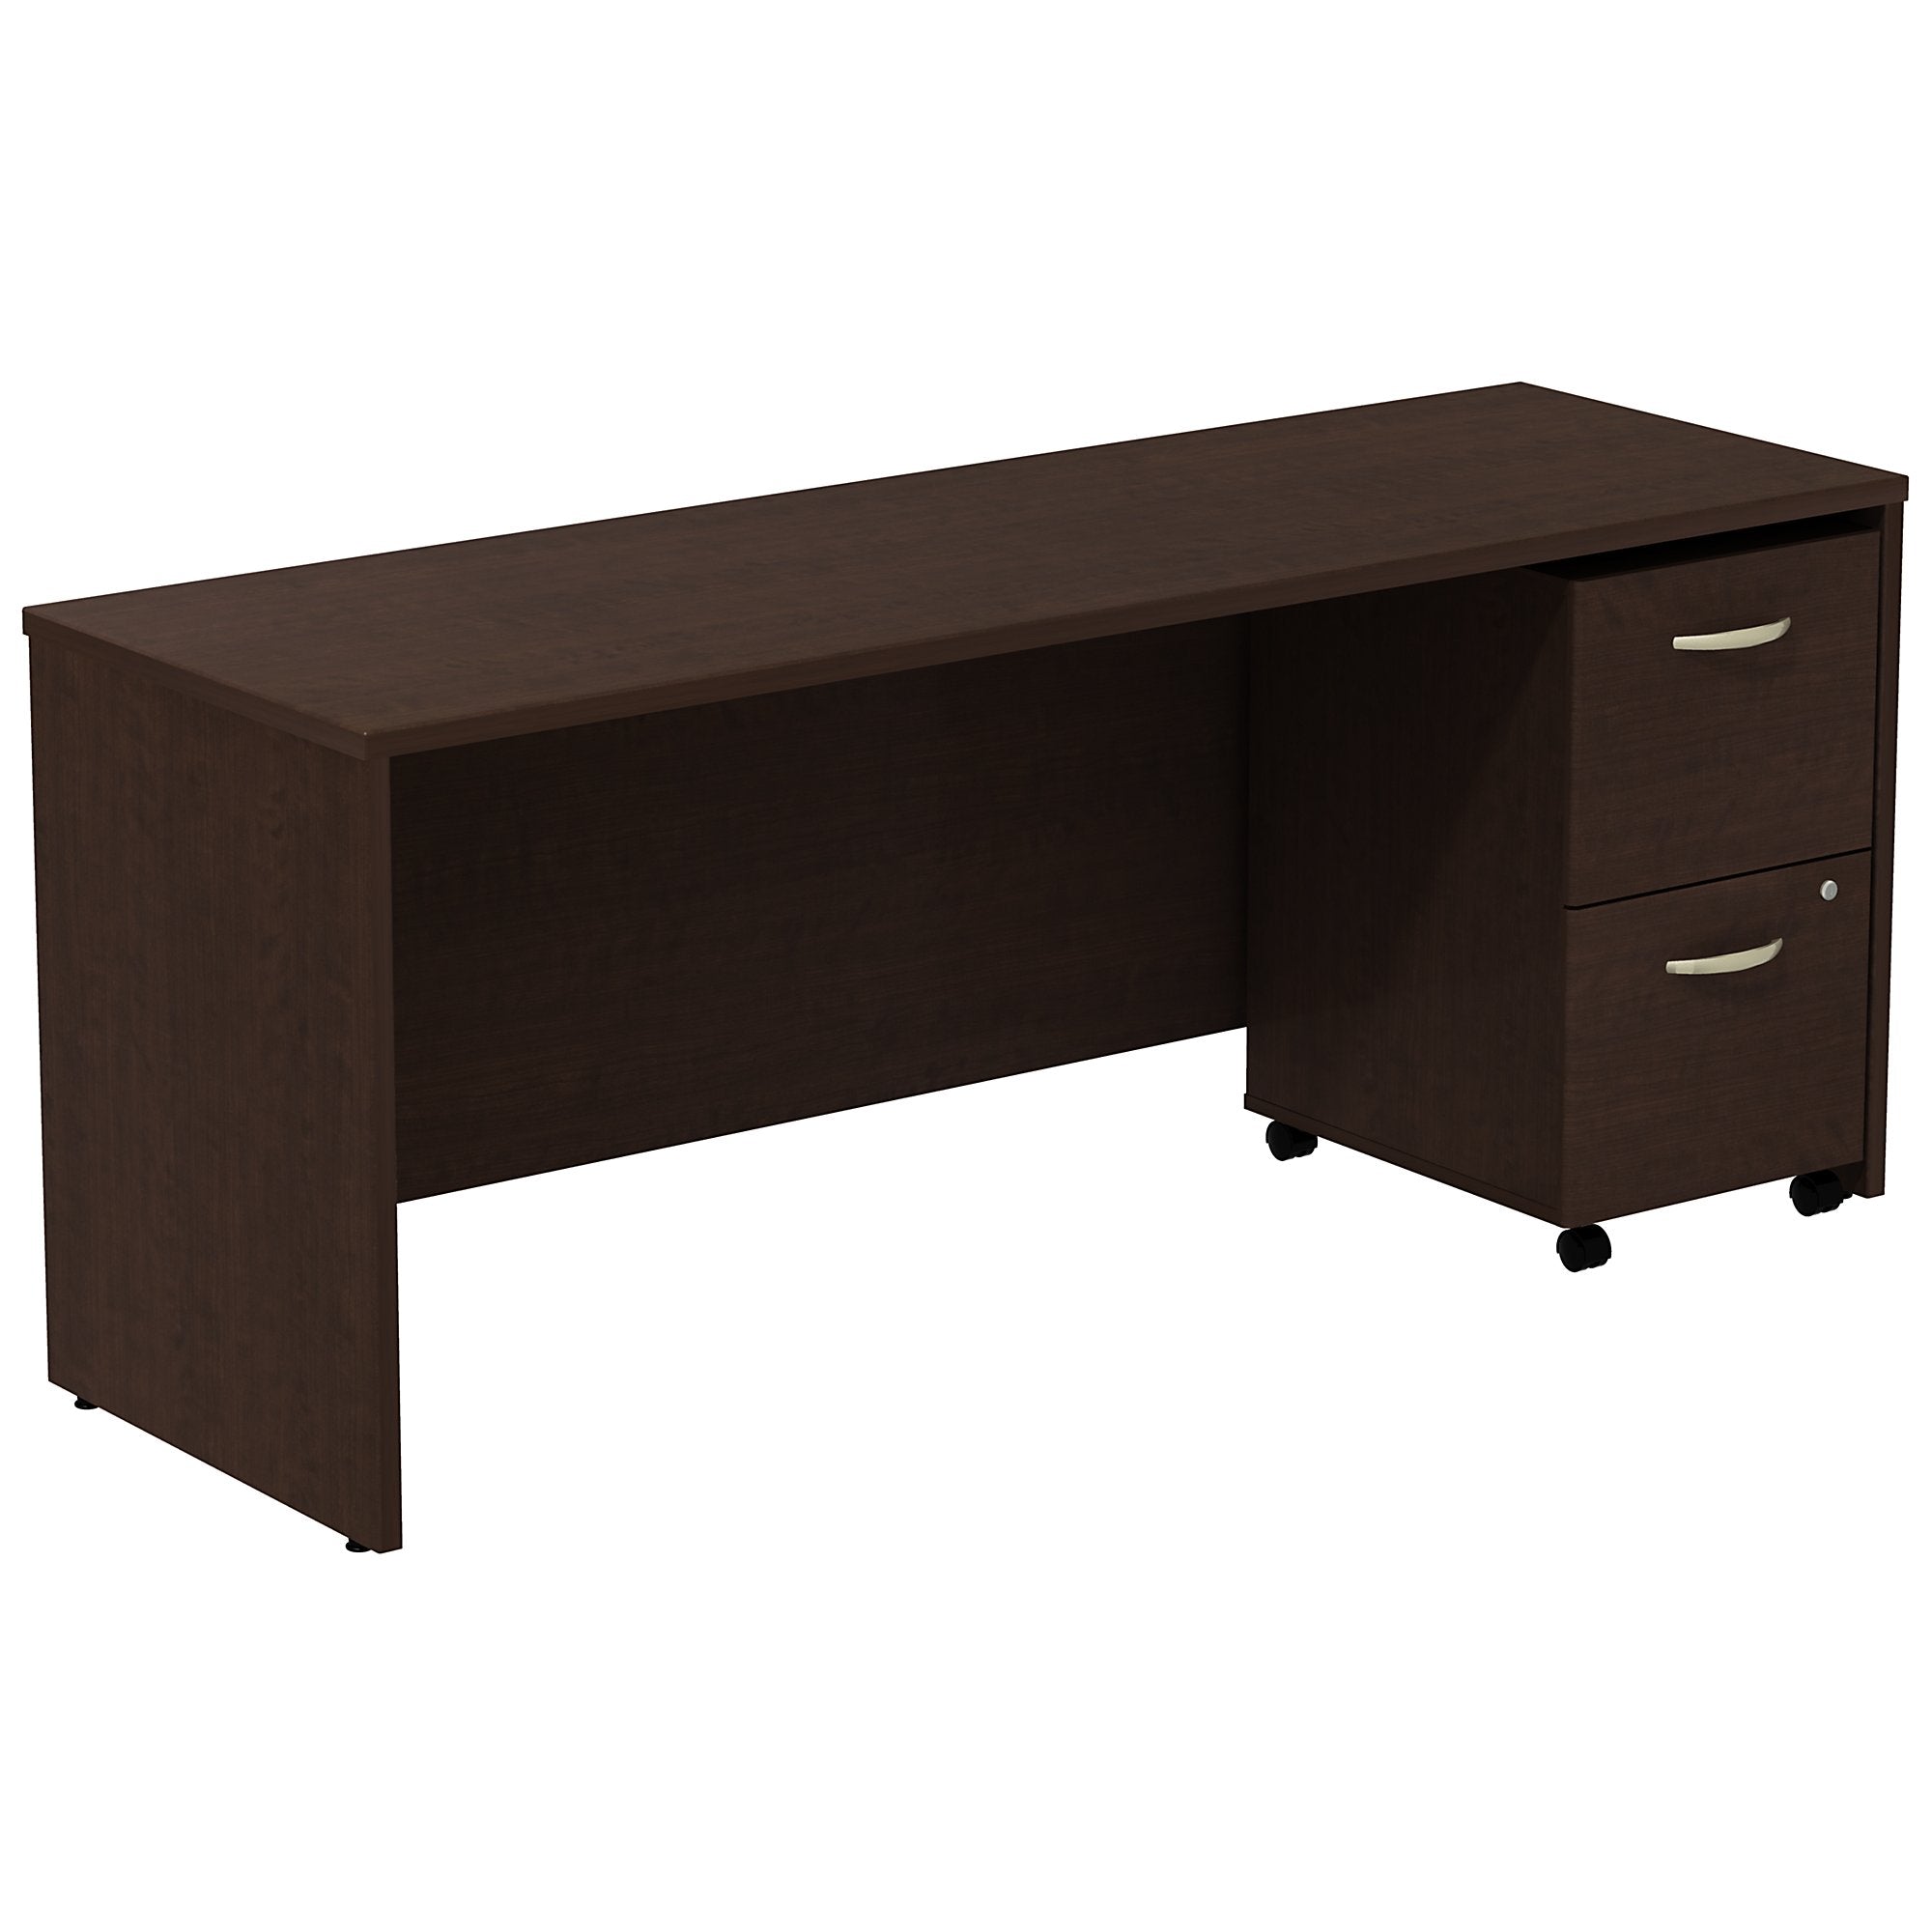 Bush Business Furniture Series C Desk Credenza with 2 Drawer Mobile Pedestal | Mocha Cherry